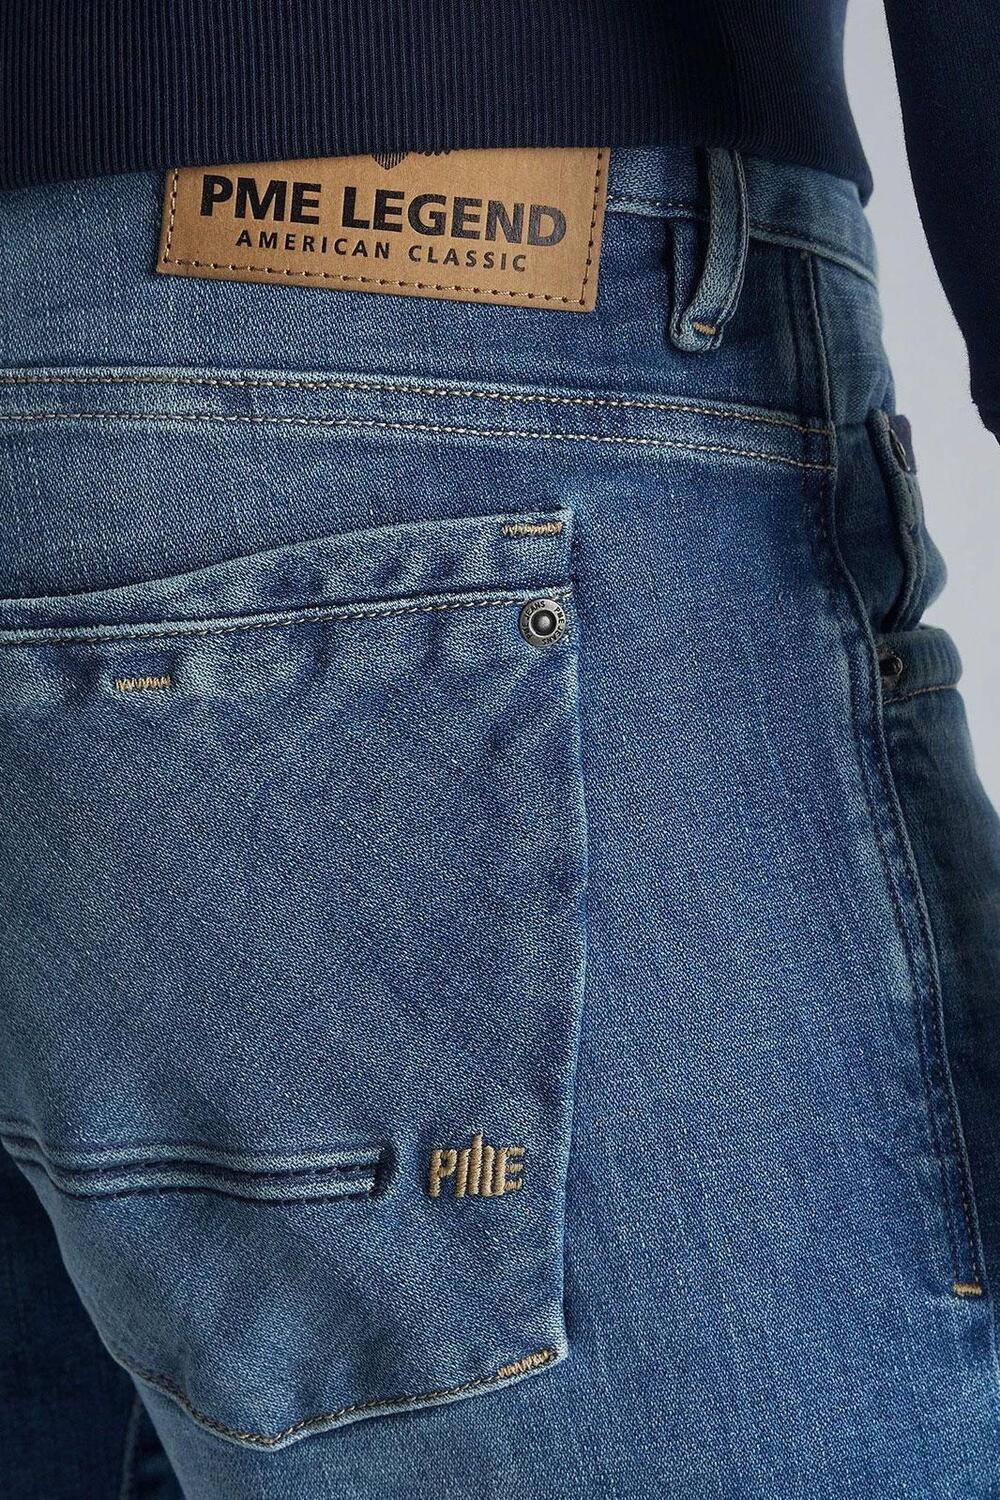 Bedrijf Ithaca Maak plaats commander 3 0 jeans ptr180 pme legend jeans fmb